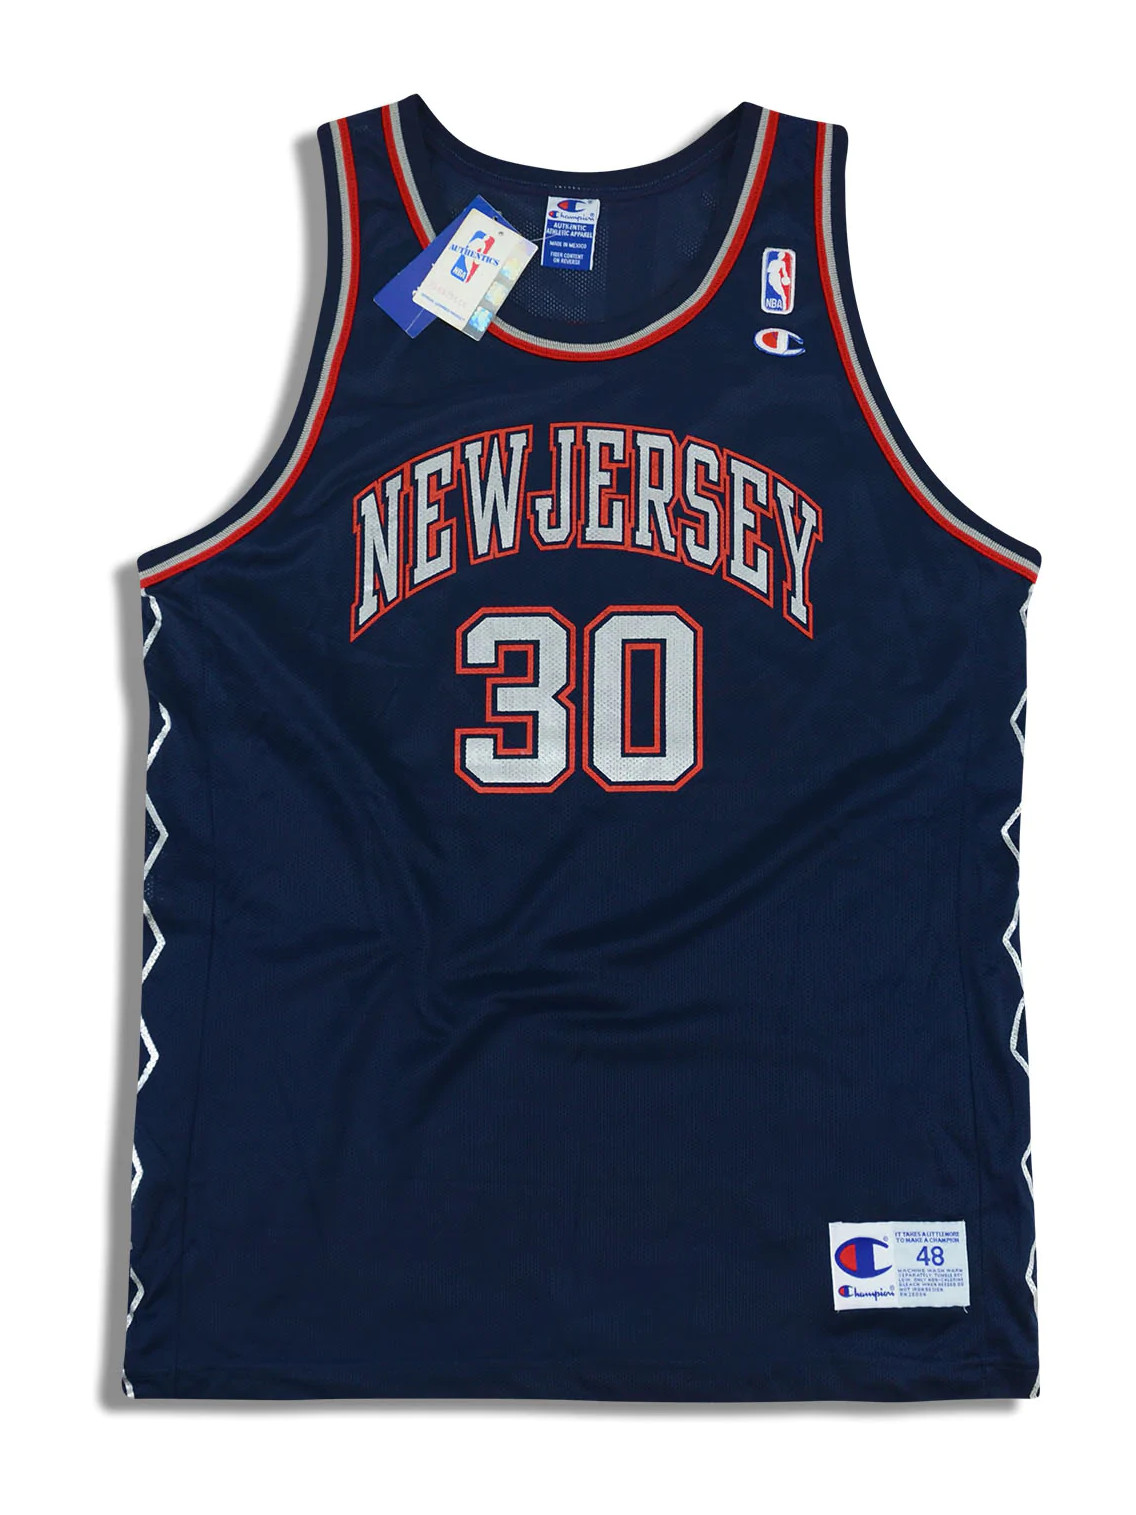 New Jersey Nets 1997-2002 Away Jersey